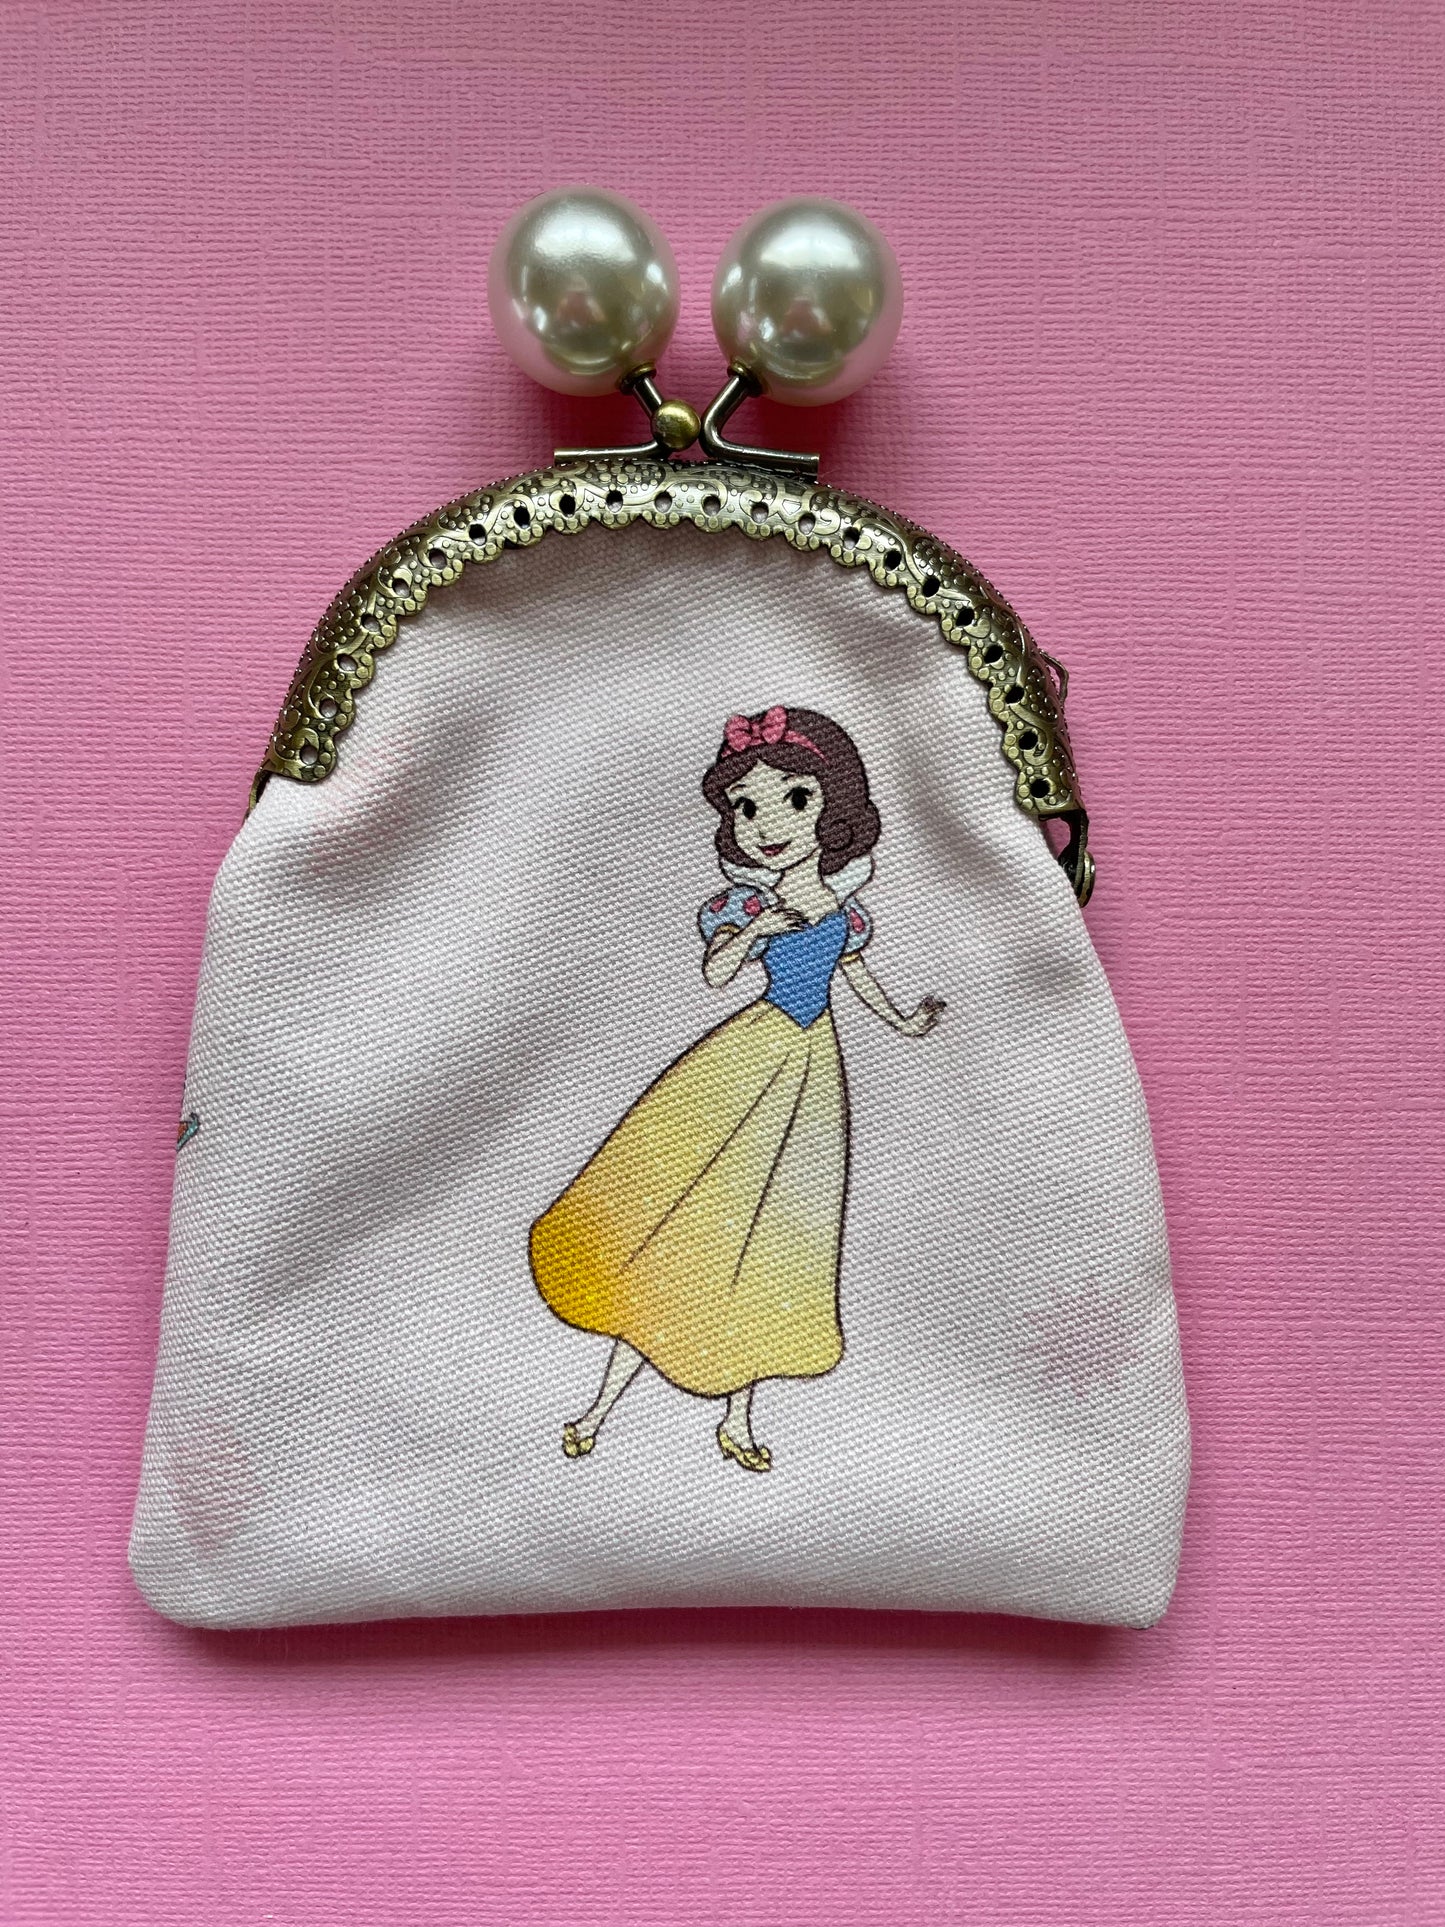 Snow White Purse Gift Box